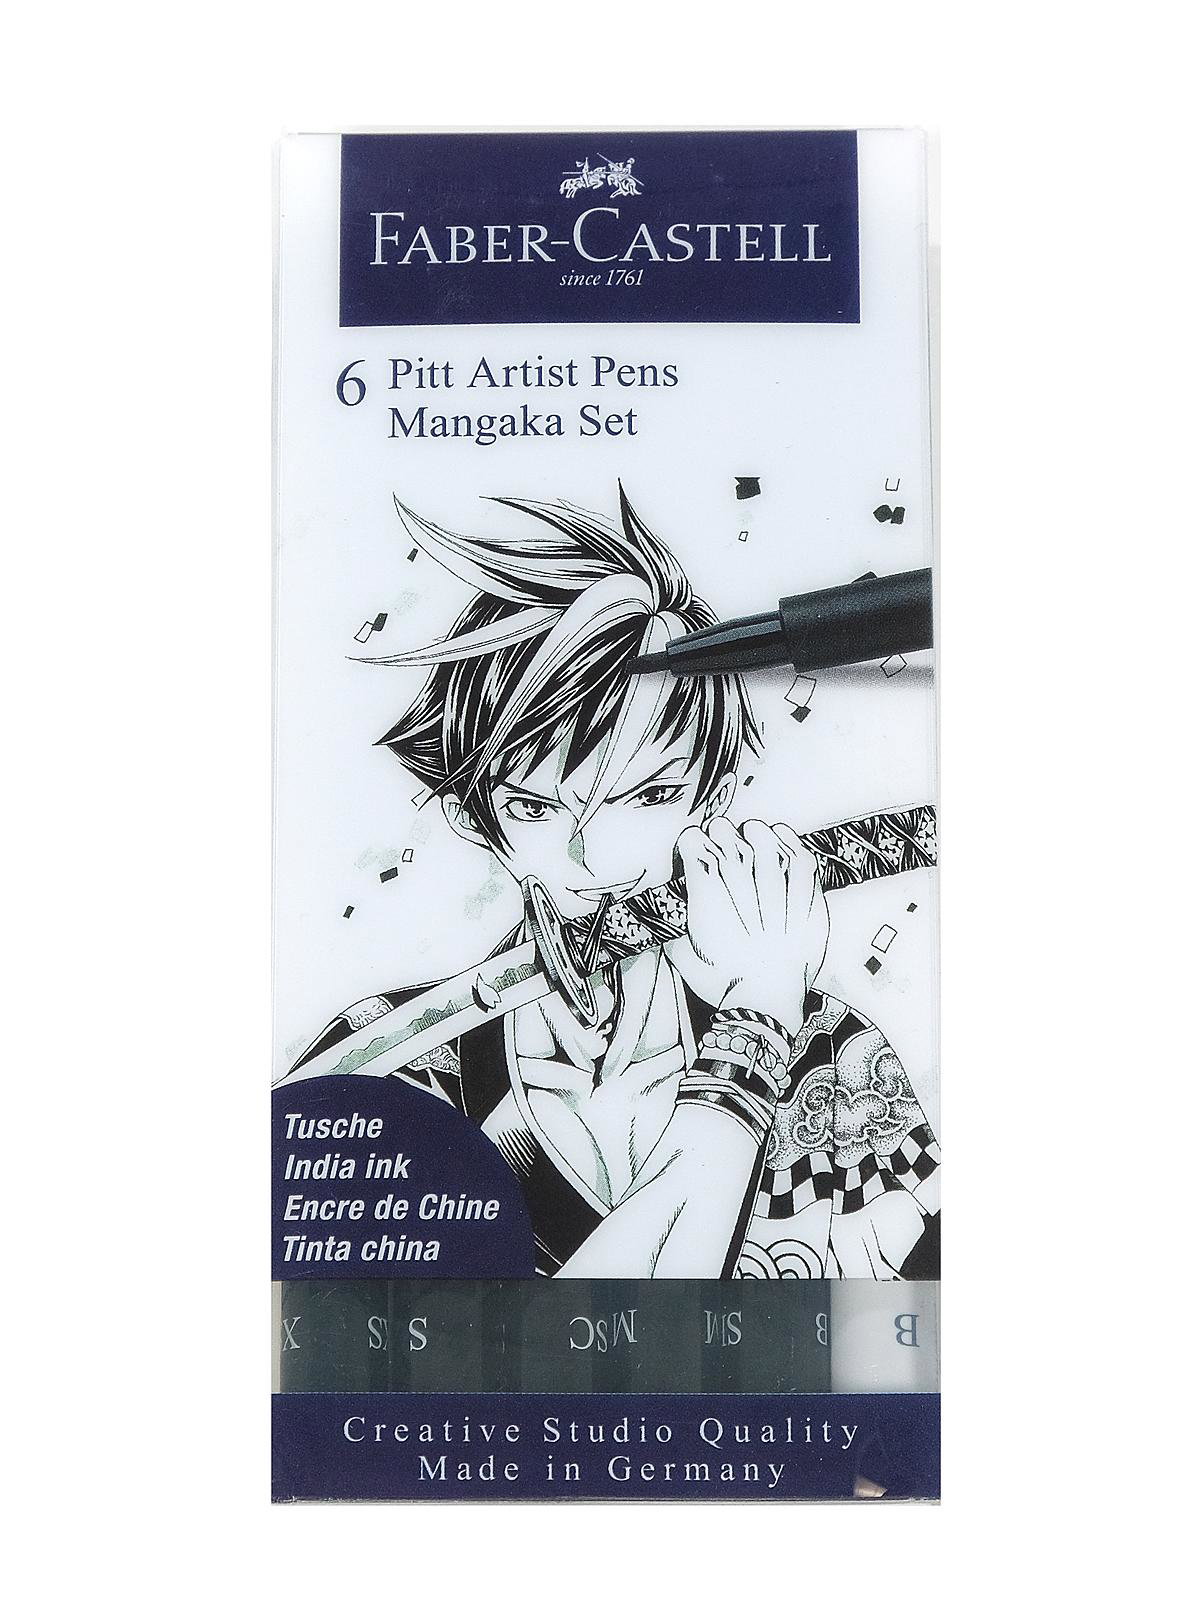 Artístico Ciencias Sociales germen Faber-Castell Manga Pen Sets | MisterArt.com